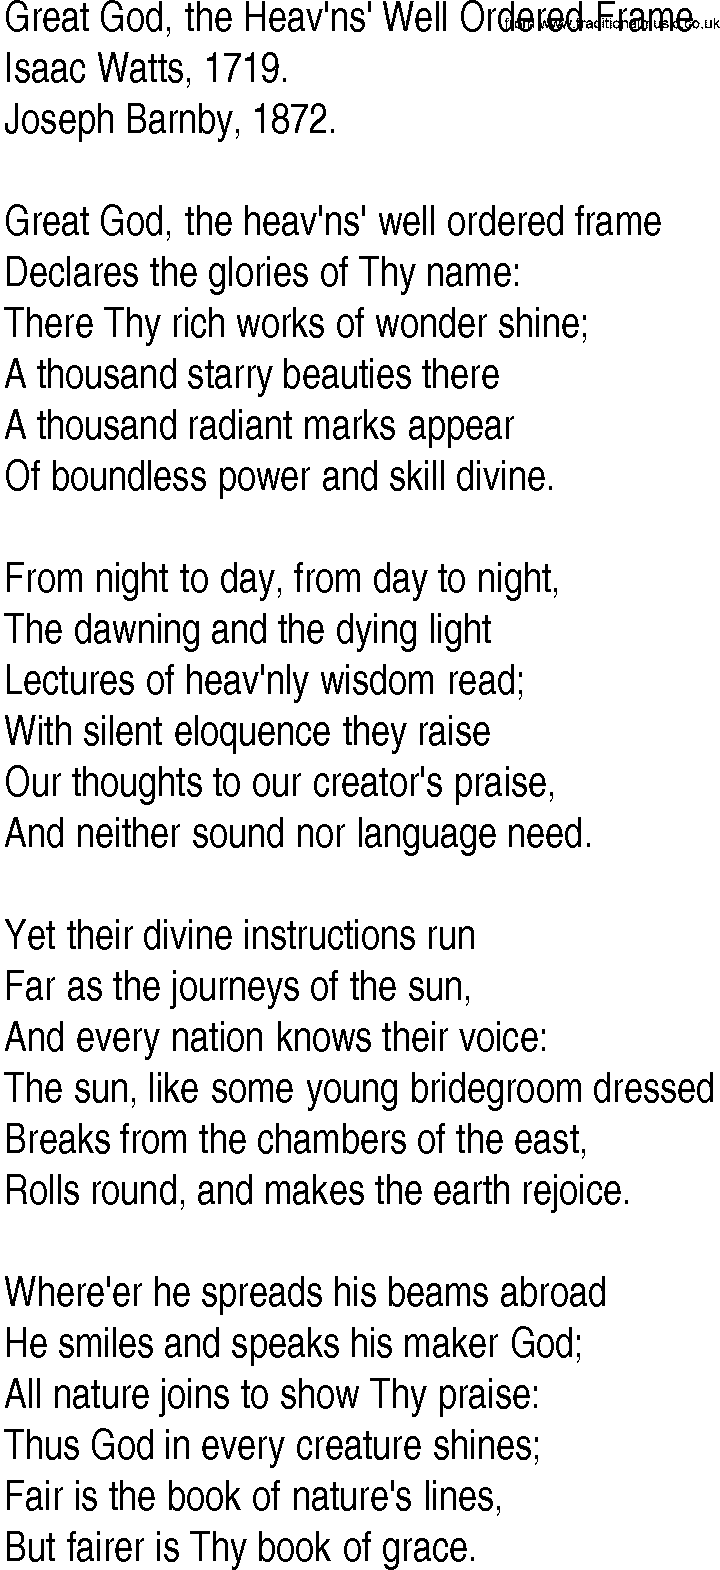 Hymn and Gospel Song: Great God, the Heav'ns' Well Ordered Frame by Isaac Watts lyrics